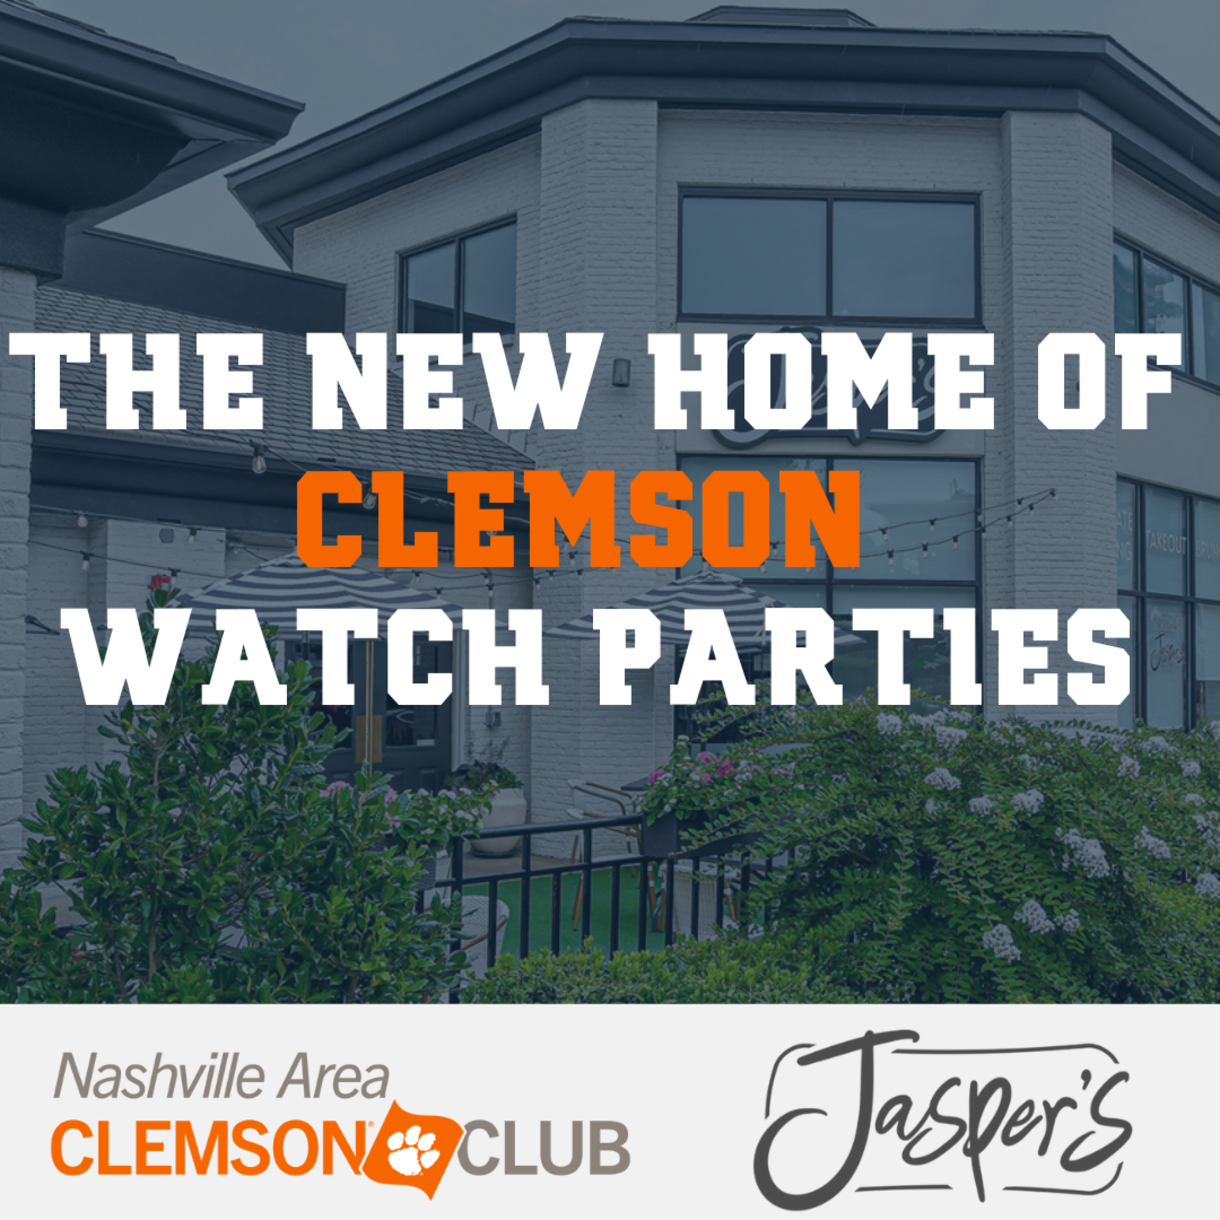 Nashville Area Clemson Club- Syracuse Watch Party